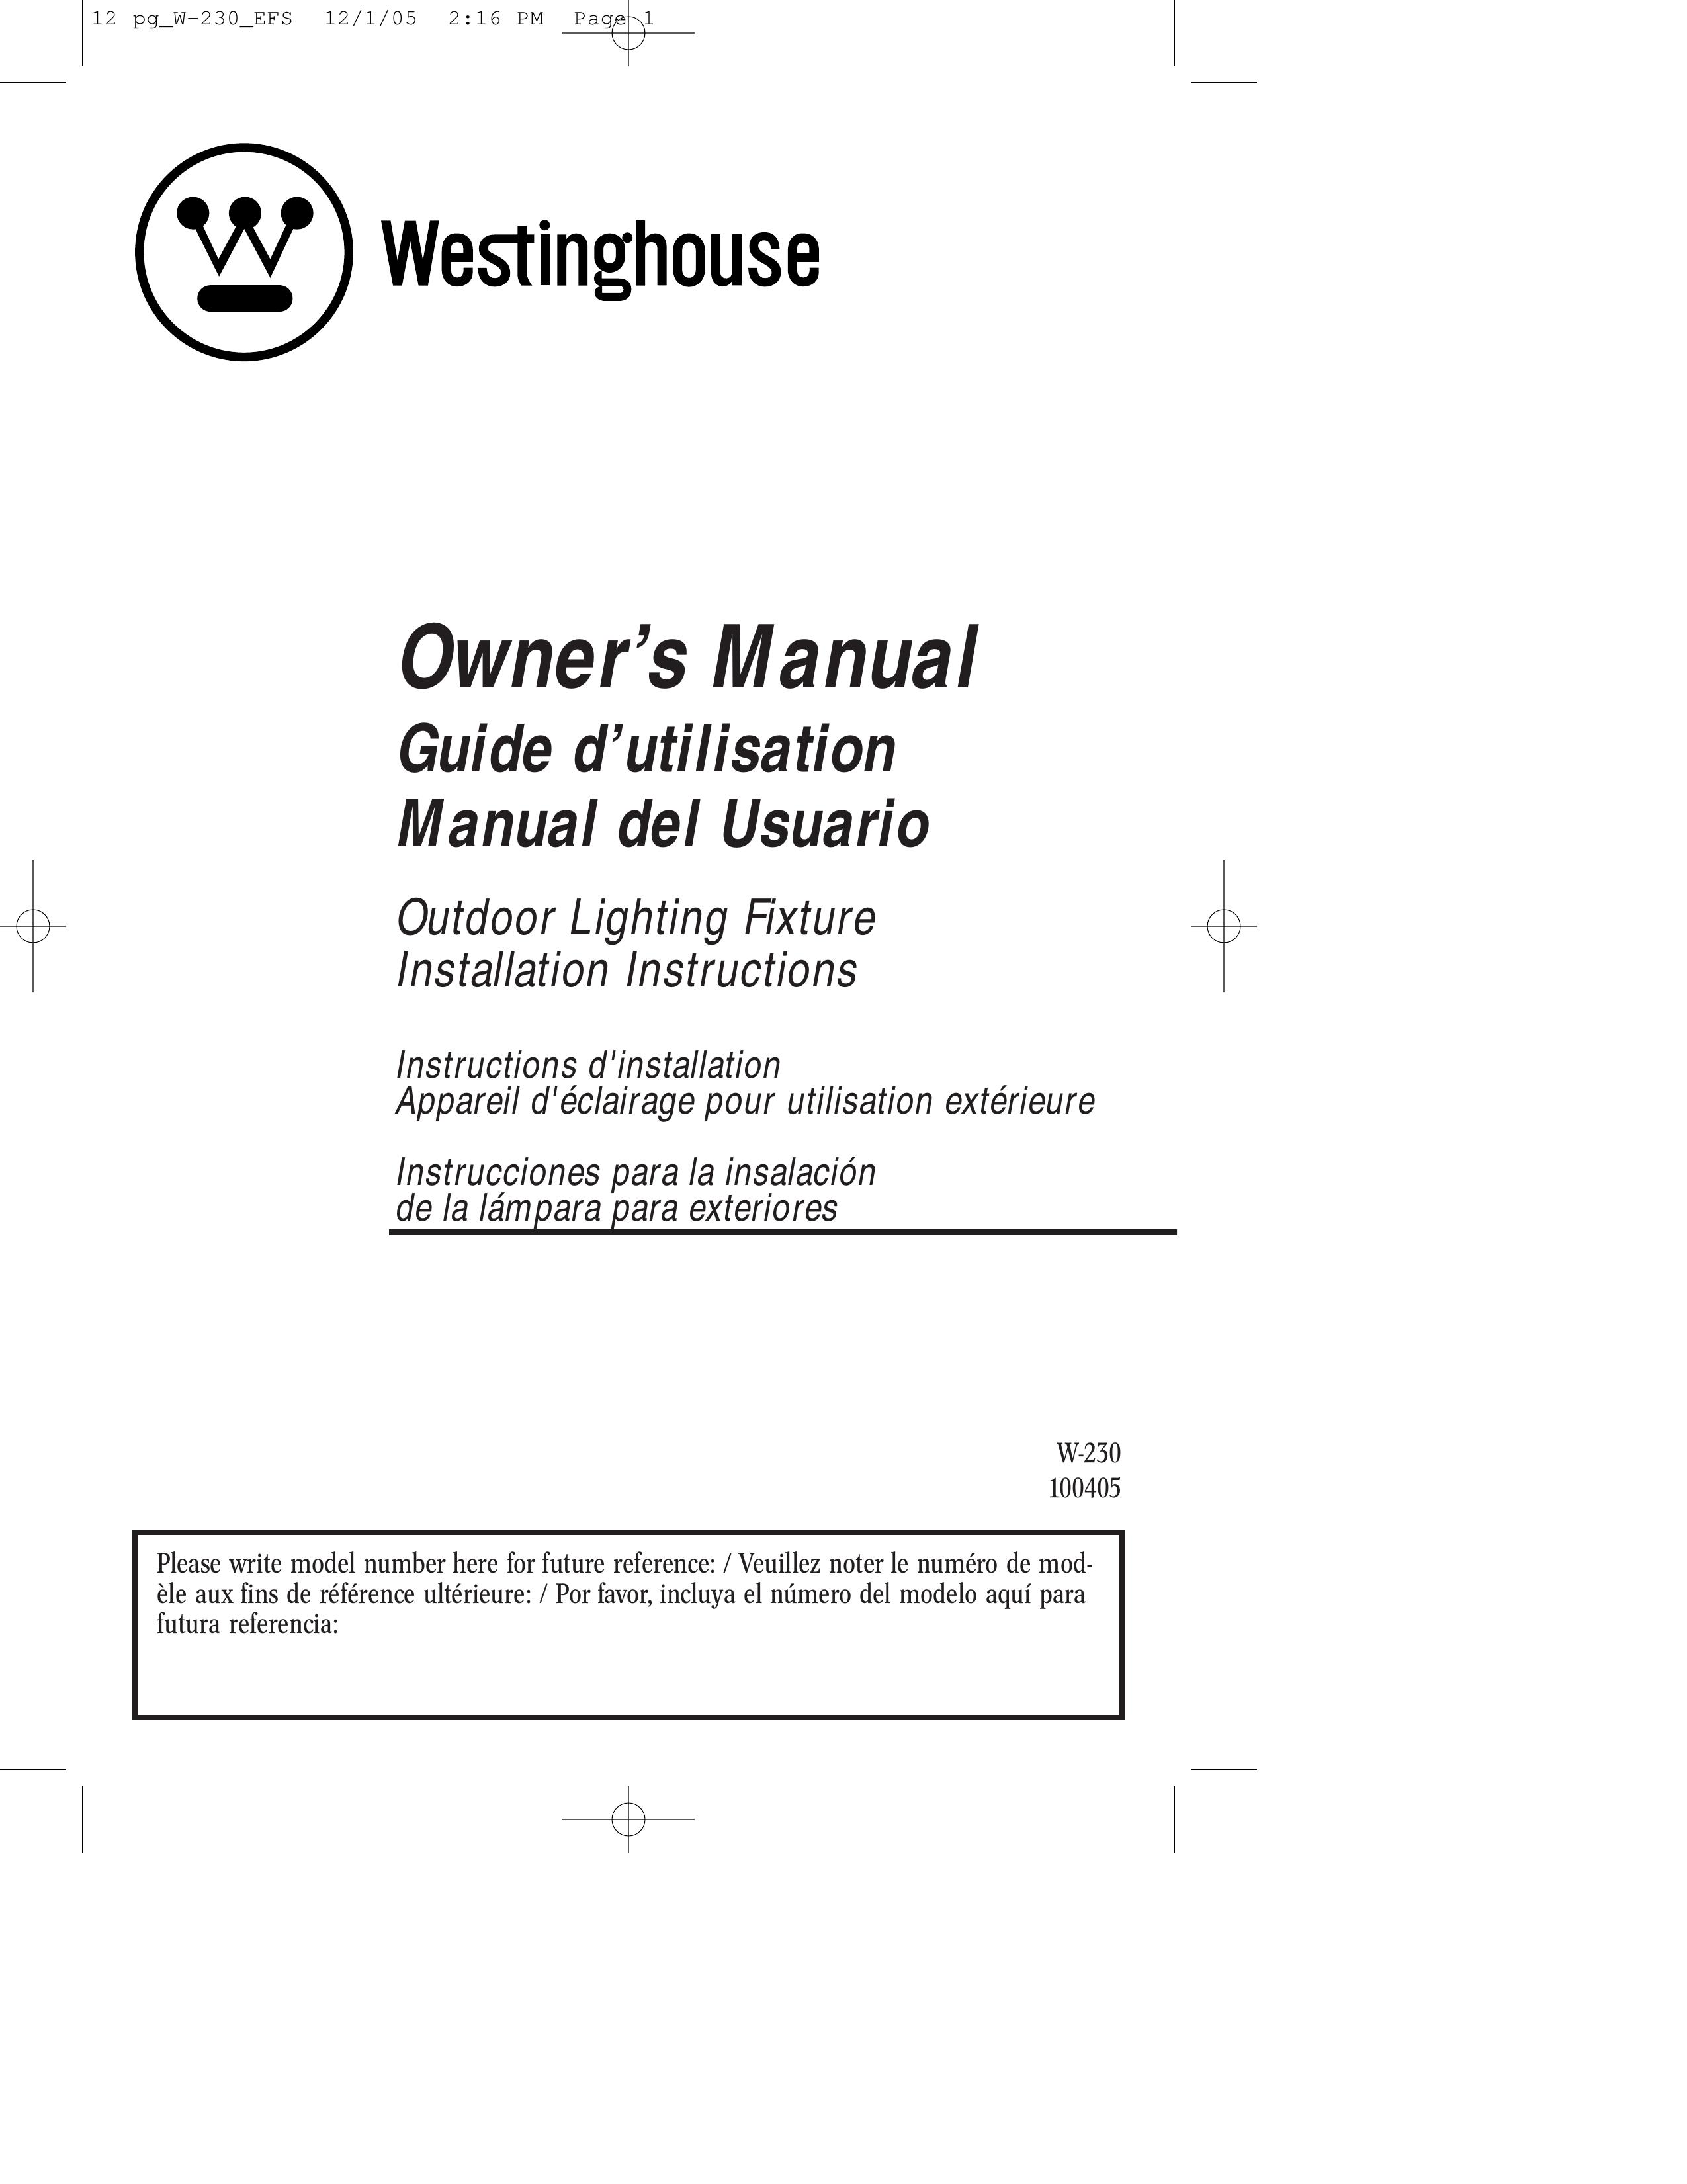 Westinghouse W-230 Landscape Lighting User Manual